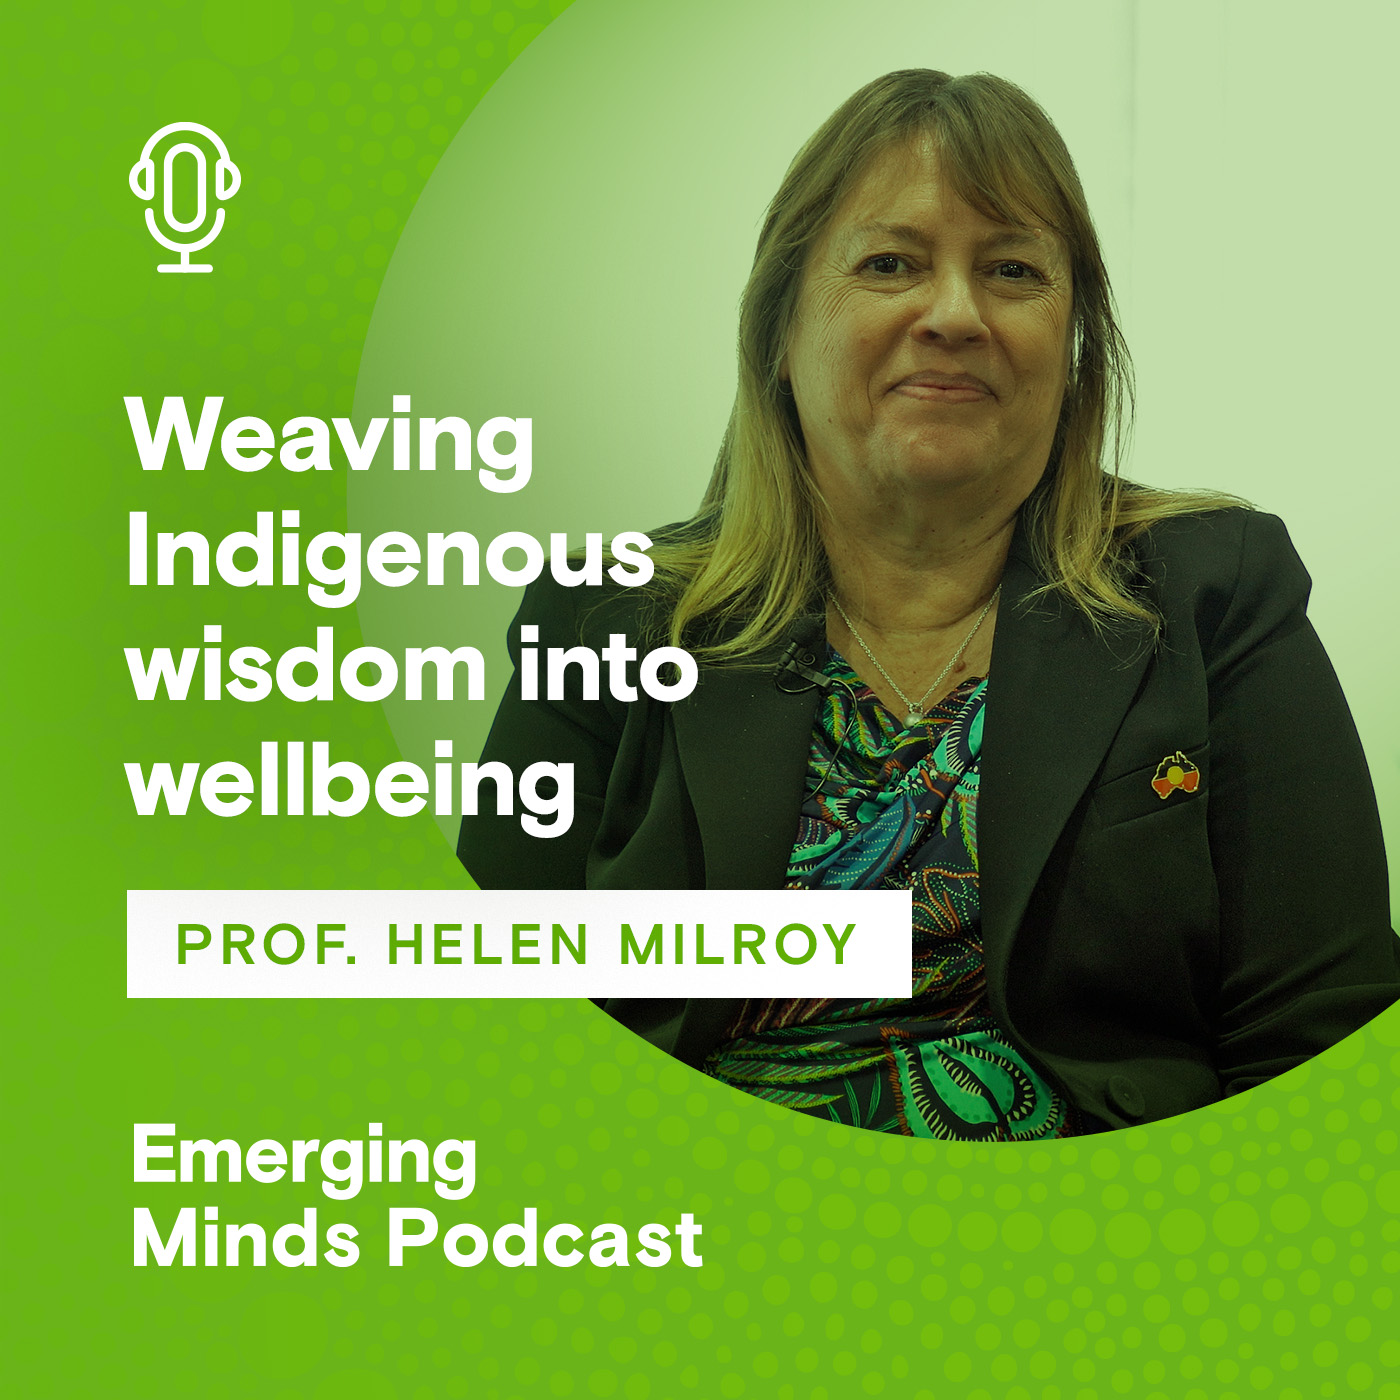 Weaving Indigenous wisdom into wellbeing